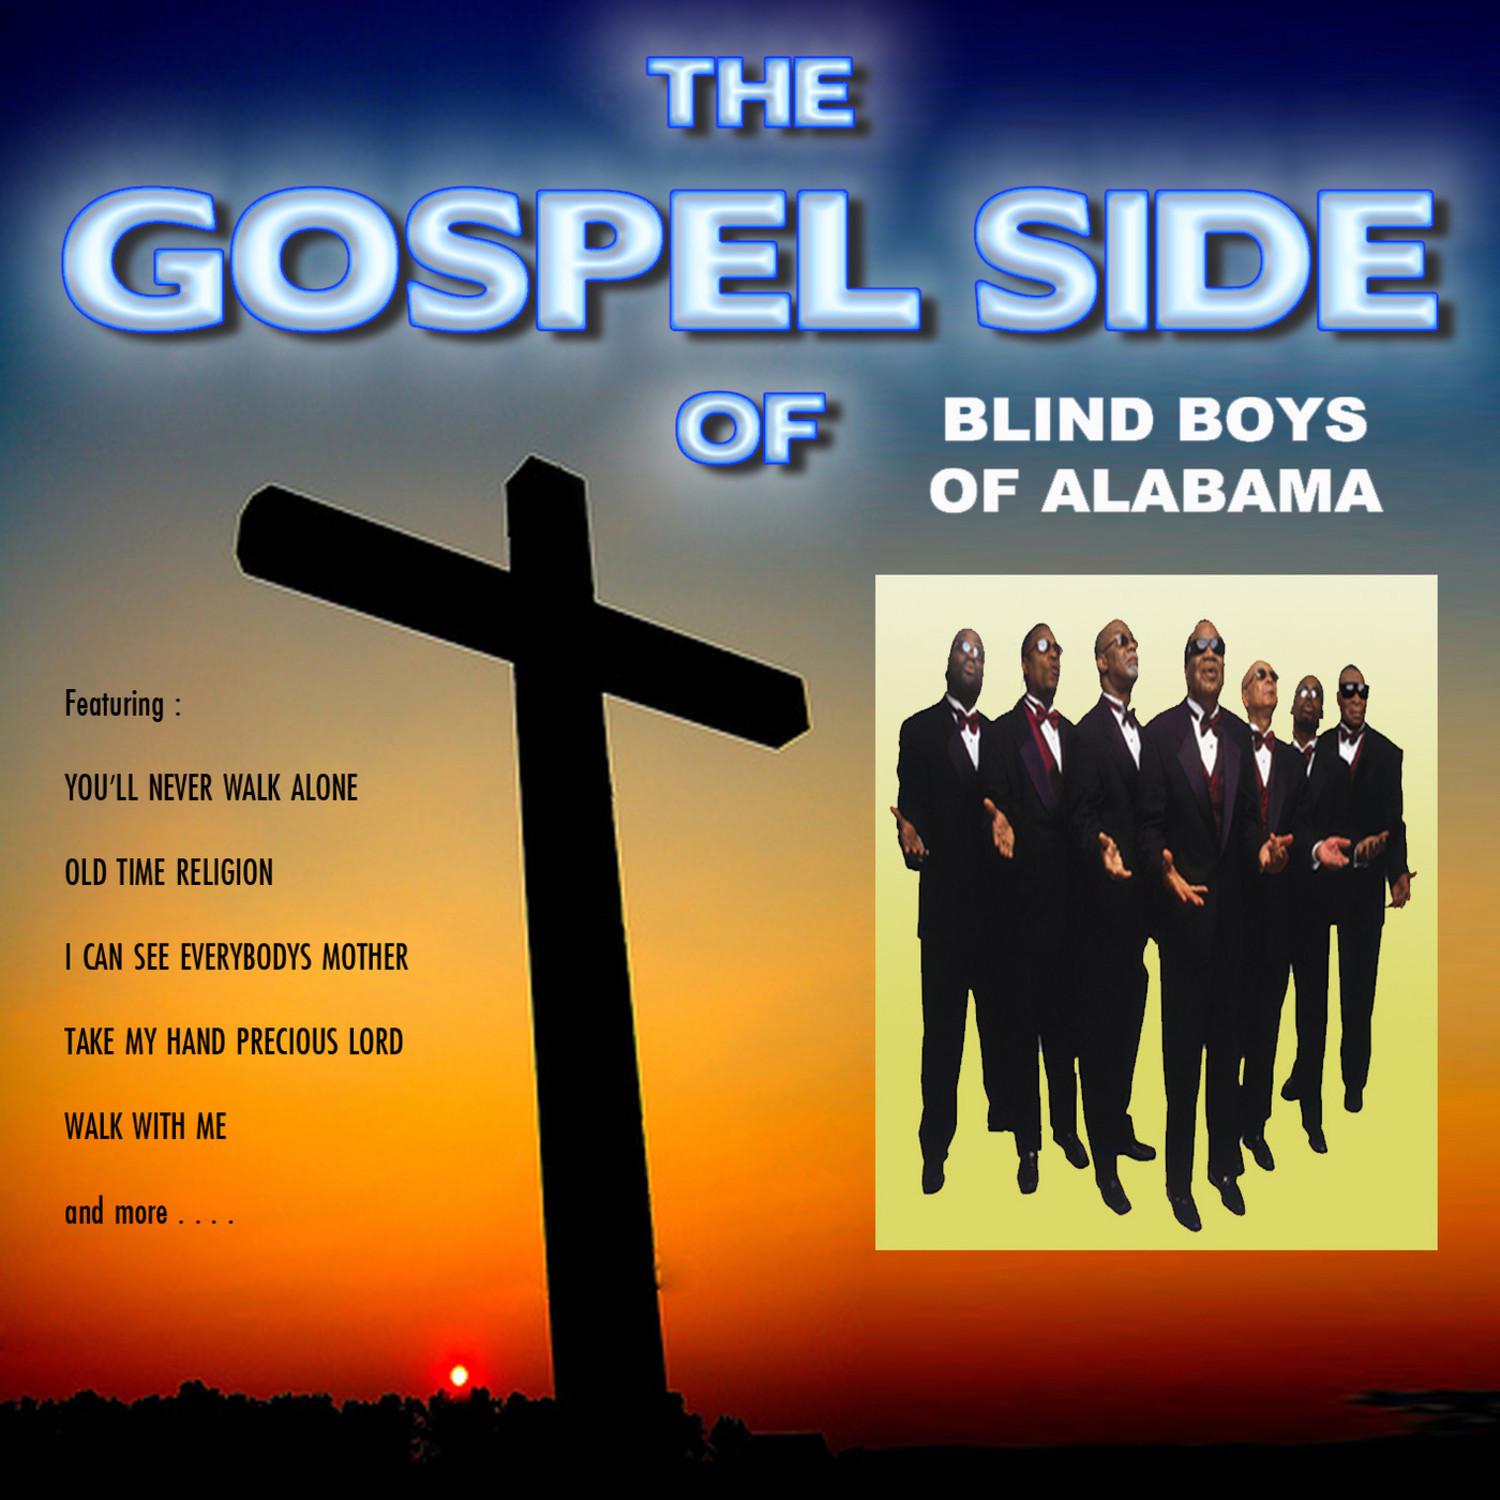 The Gospel Side of the Blind Boys of Alabama